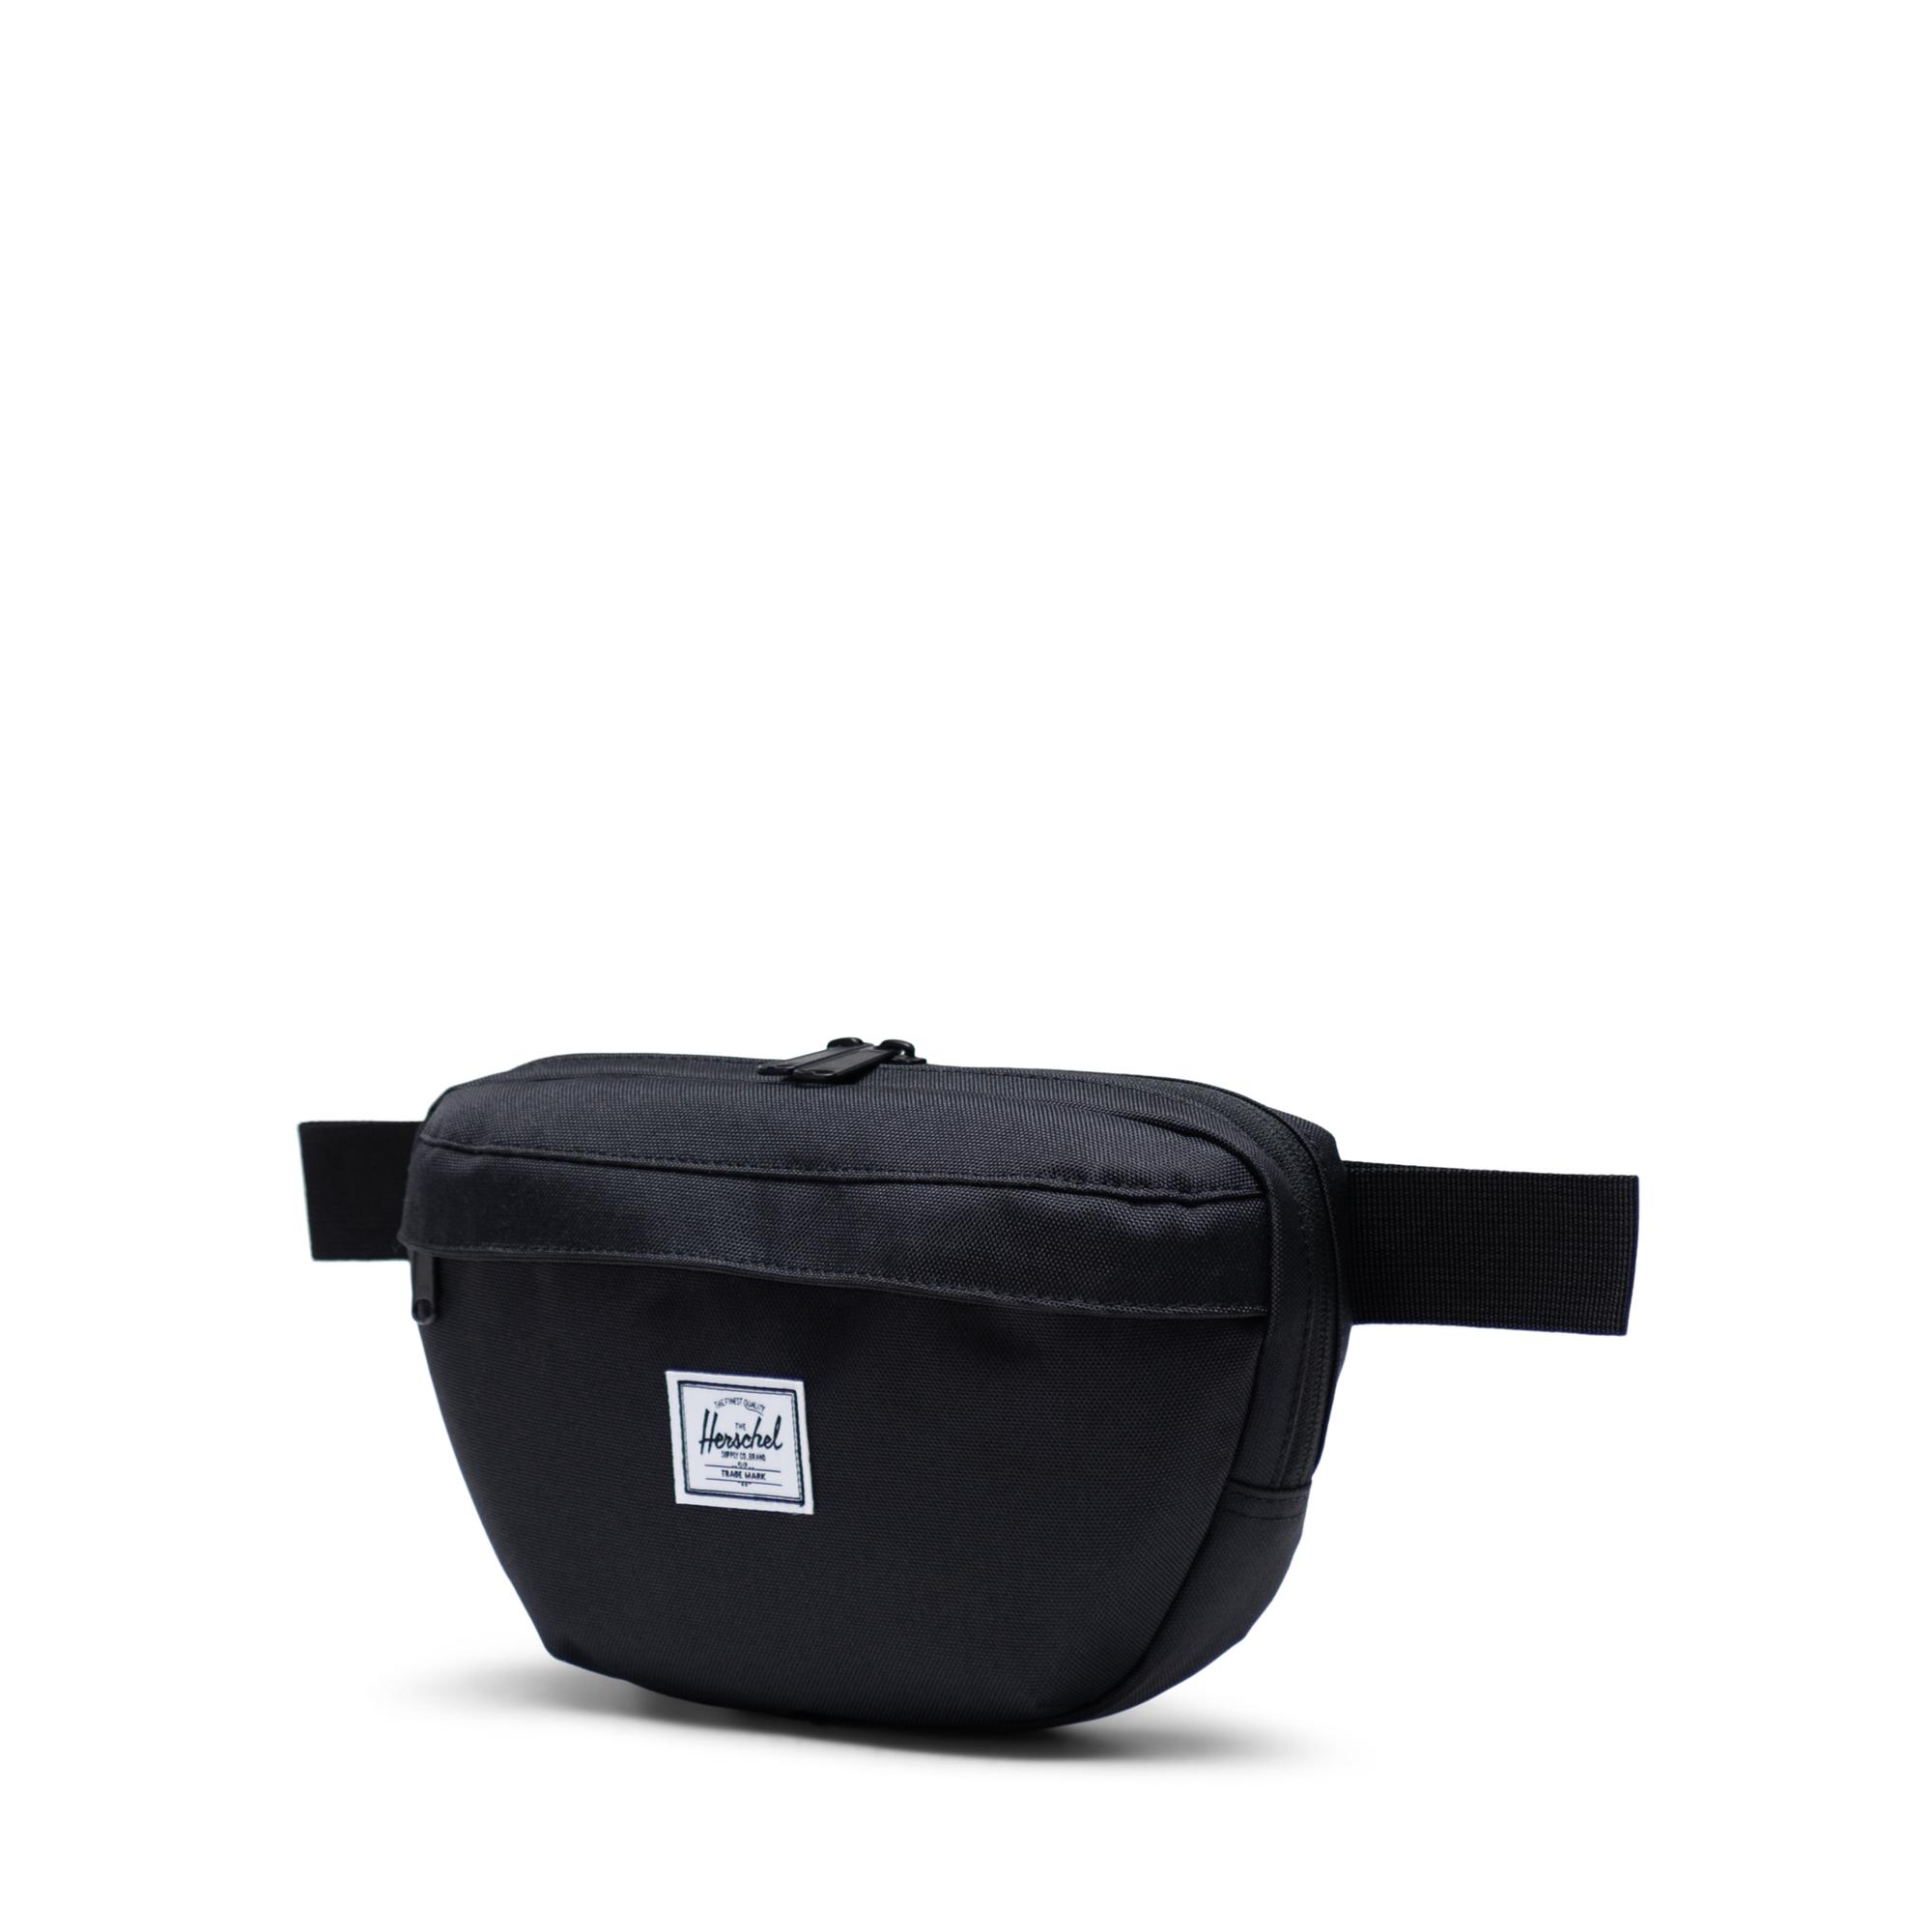 Nineteen Hip Pack Bag | Herschel Supply Co.